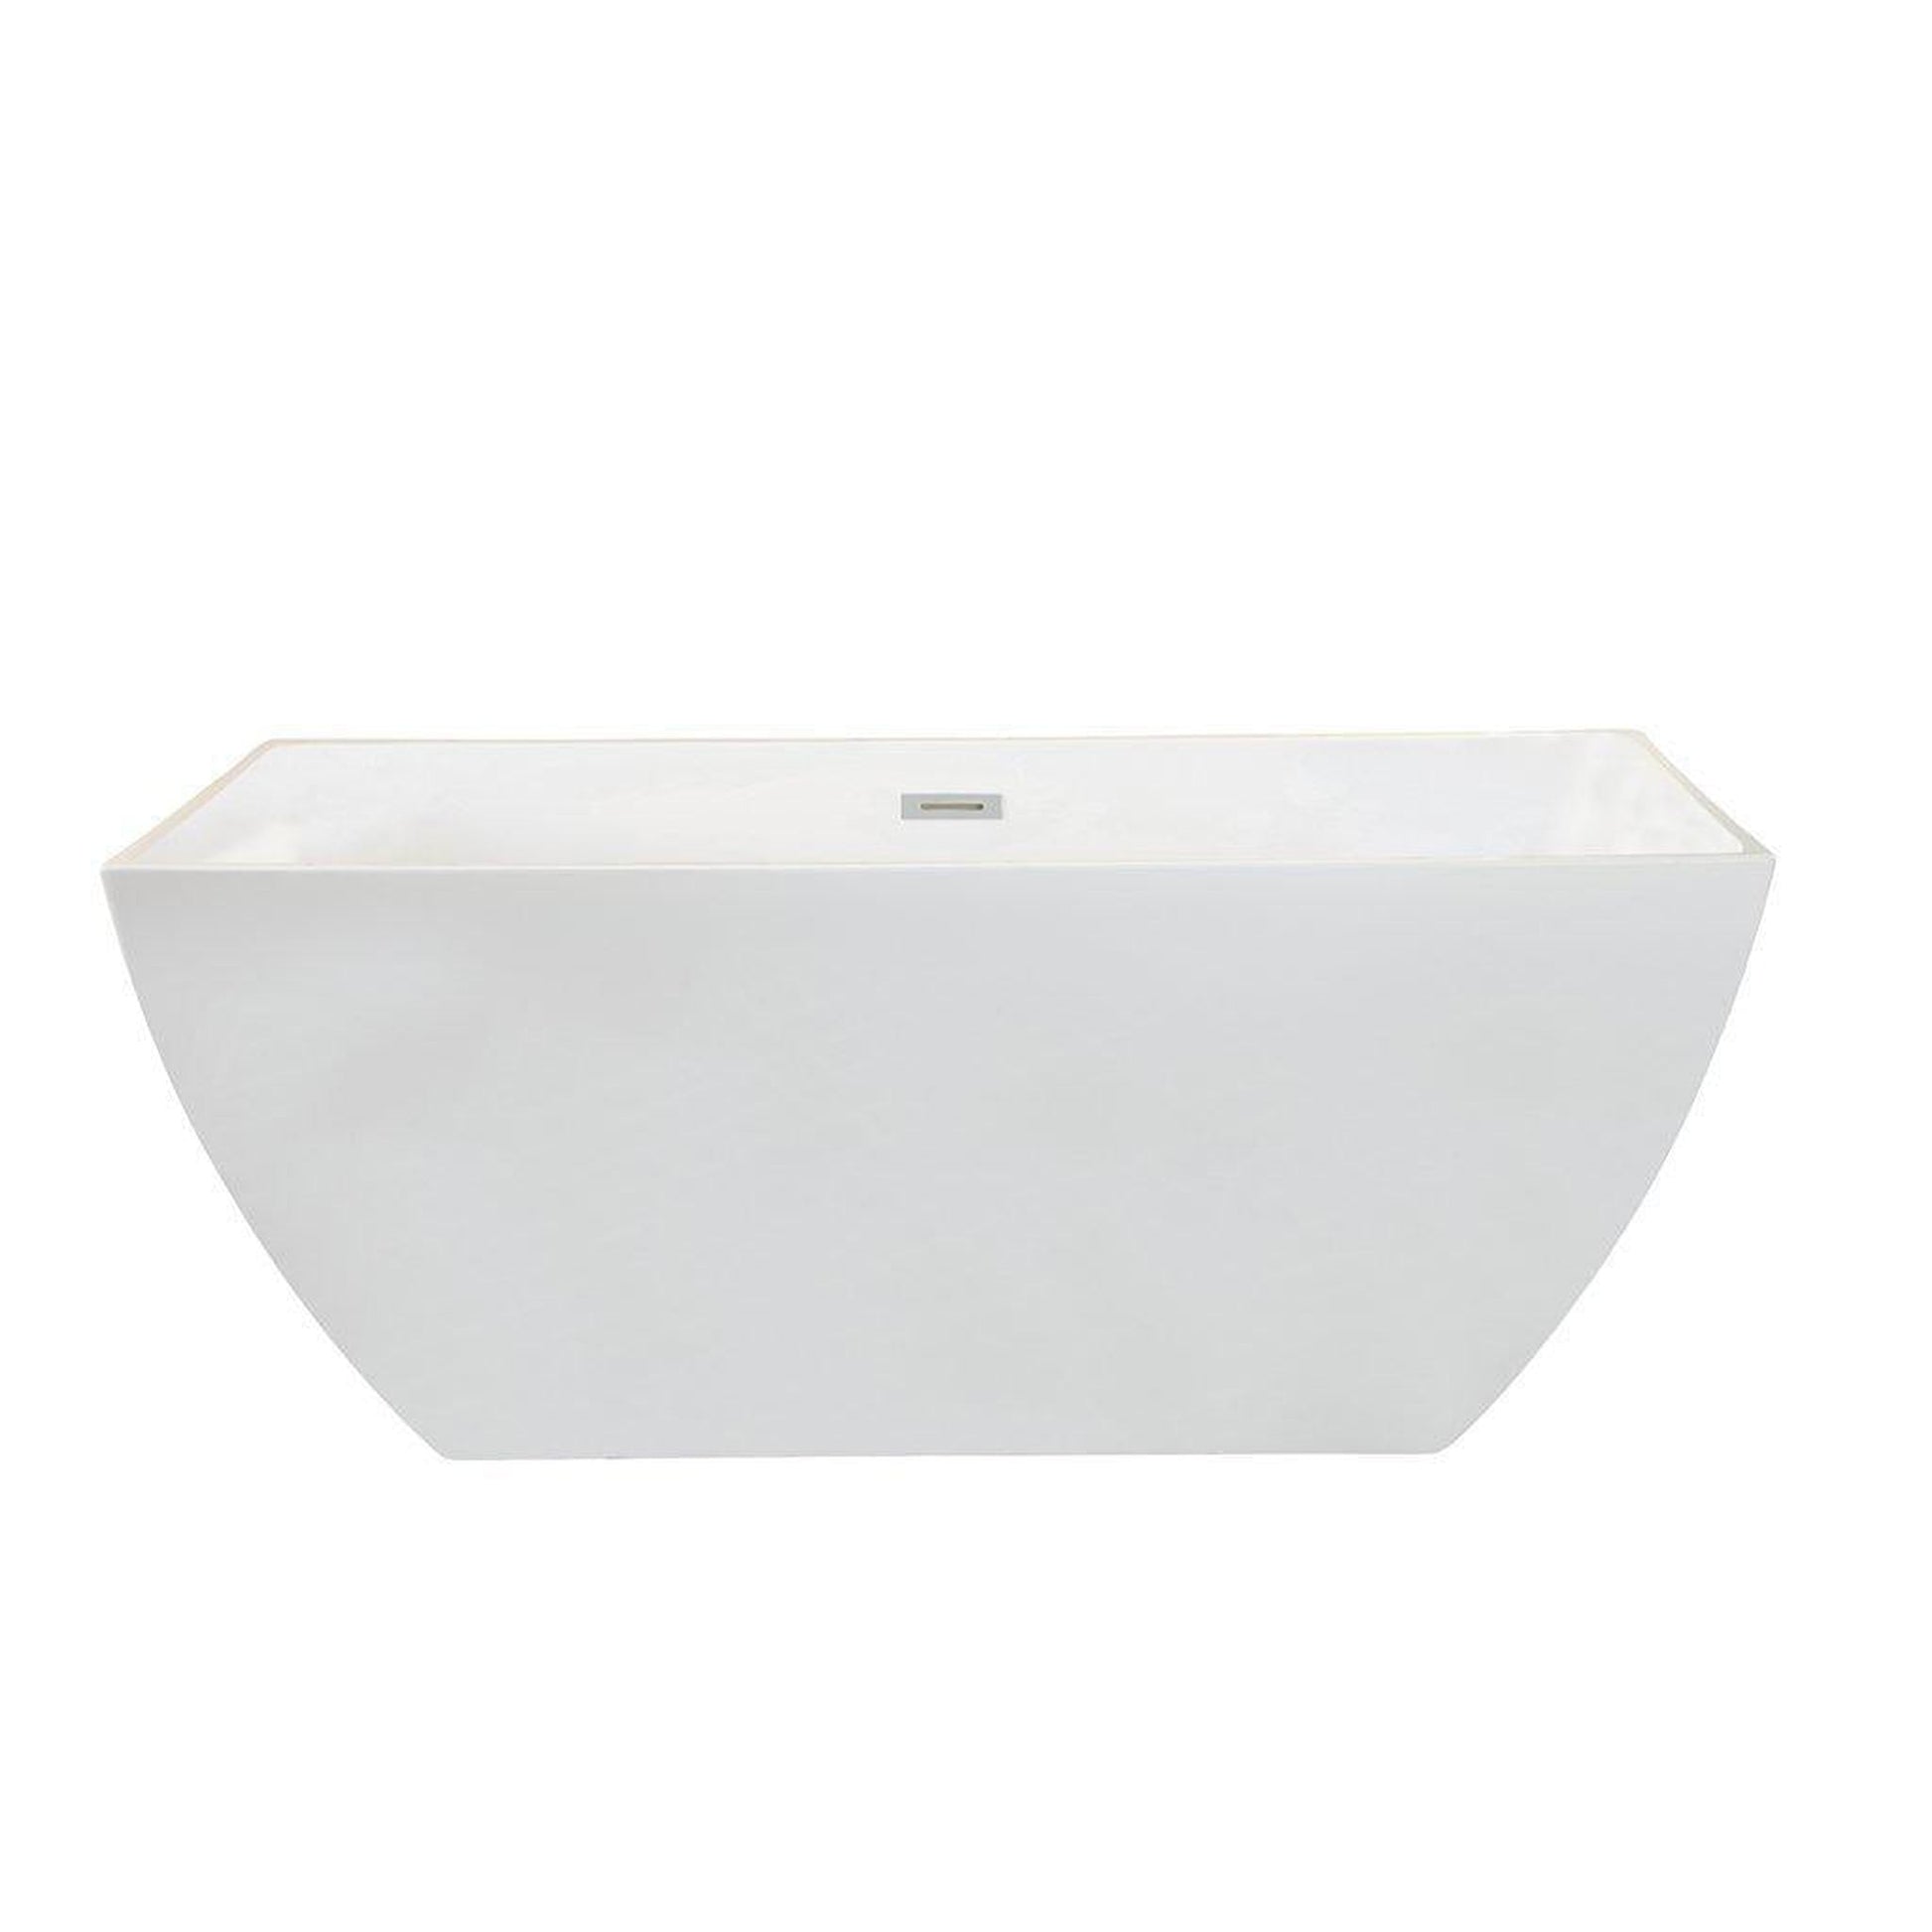 Altair Montague 59" x 30" White Acrylic Freestanding Bathtub